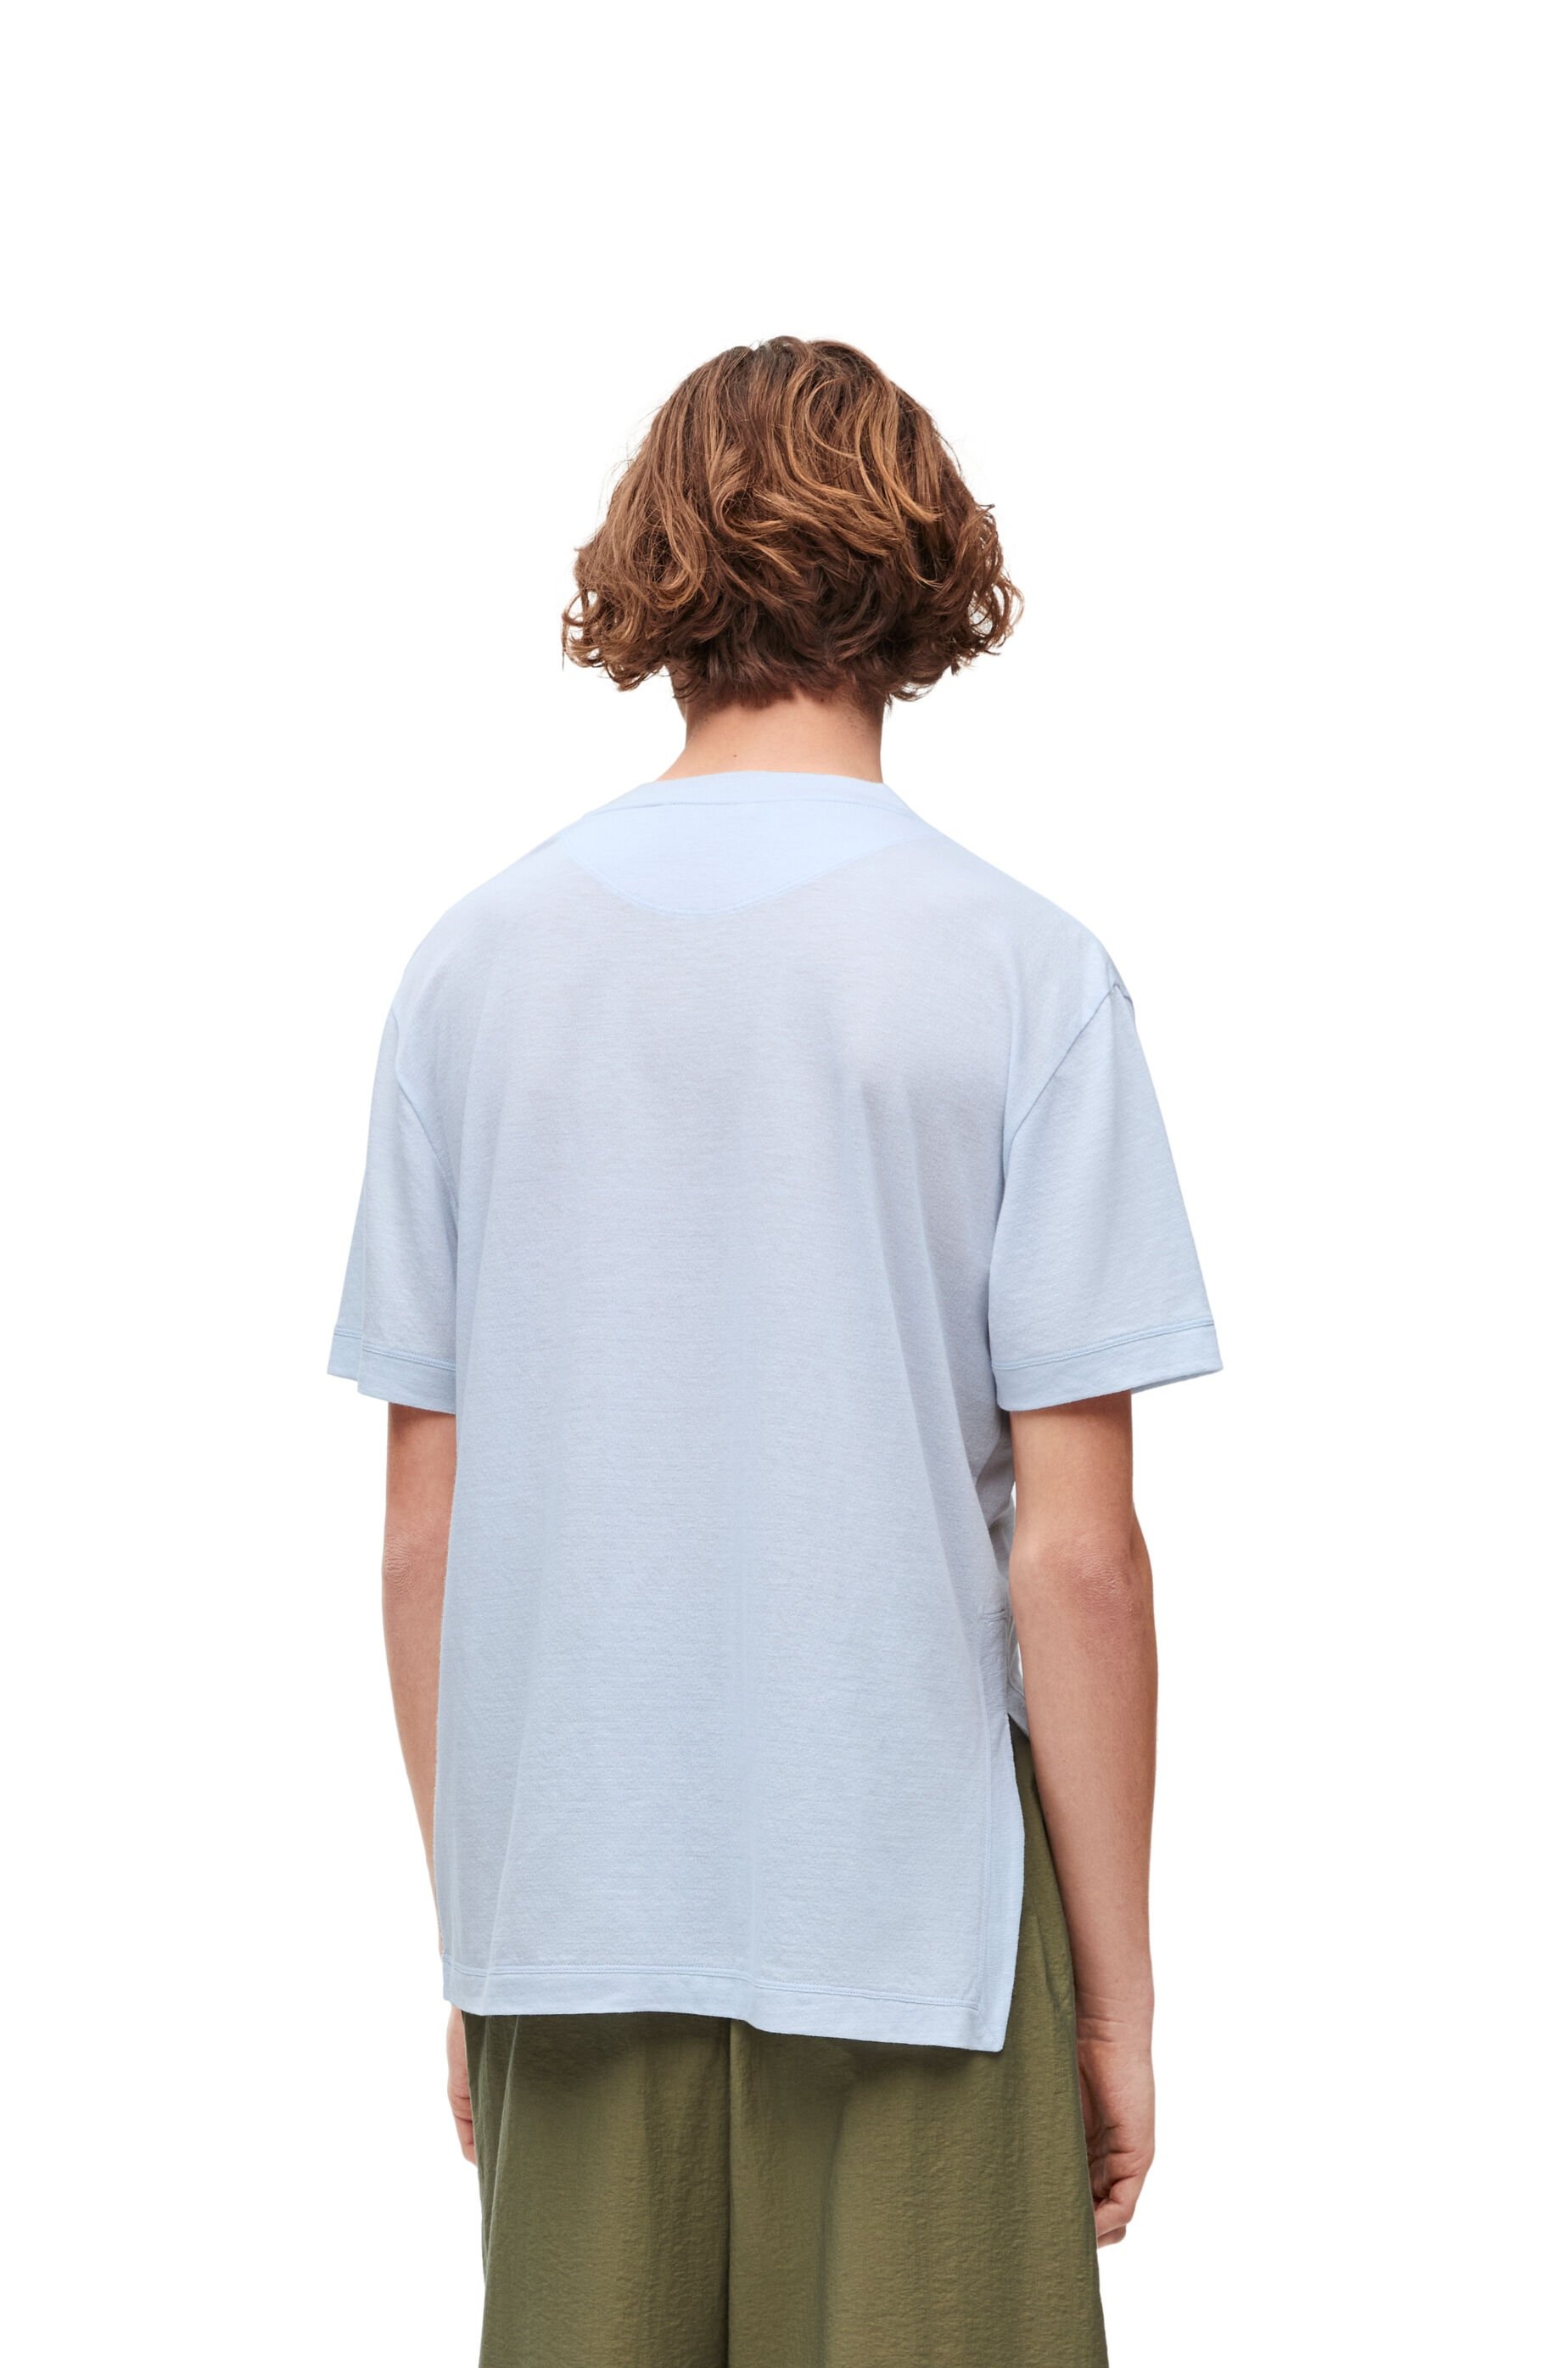 Asymmetric T-shirt in cotton blend - 4